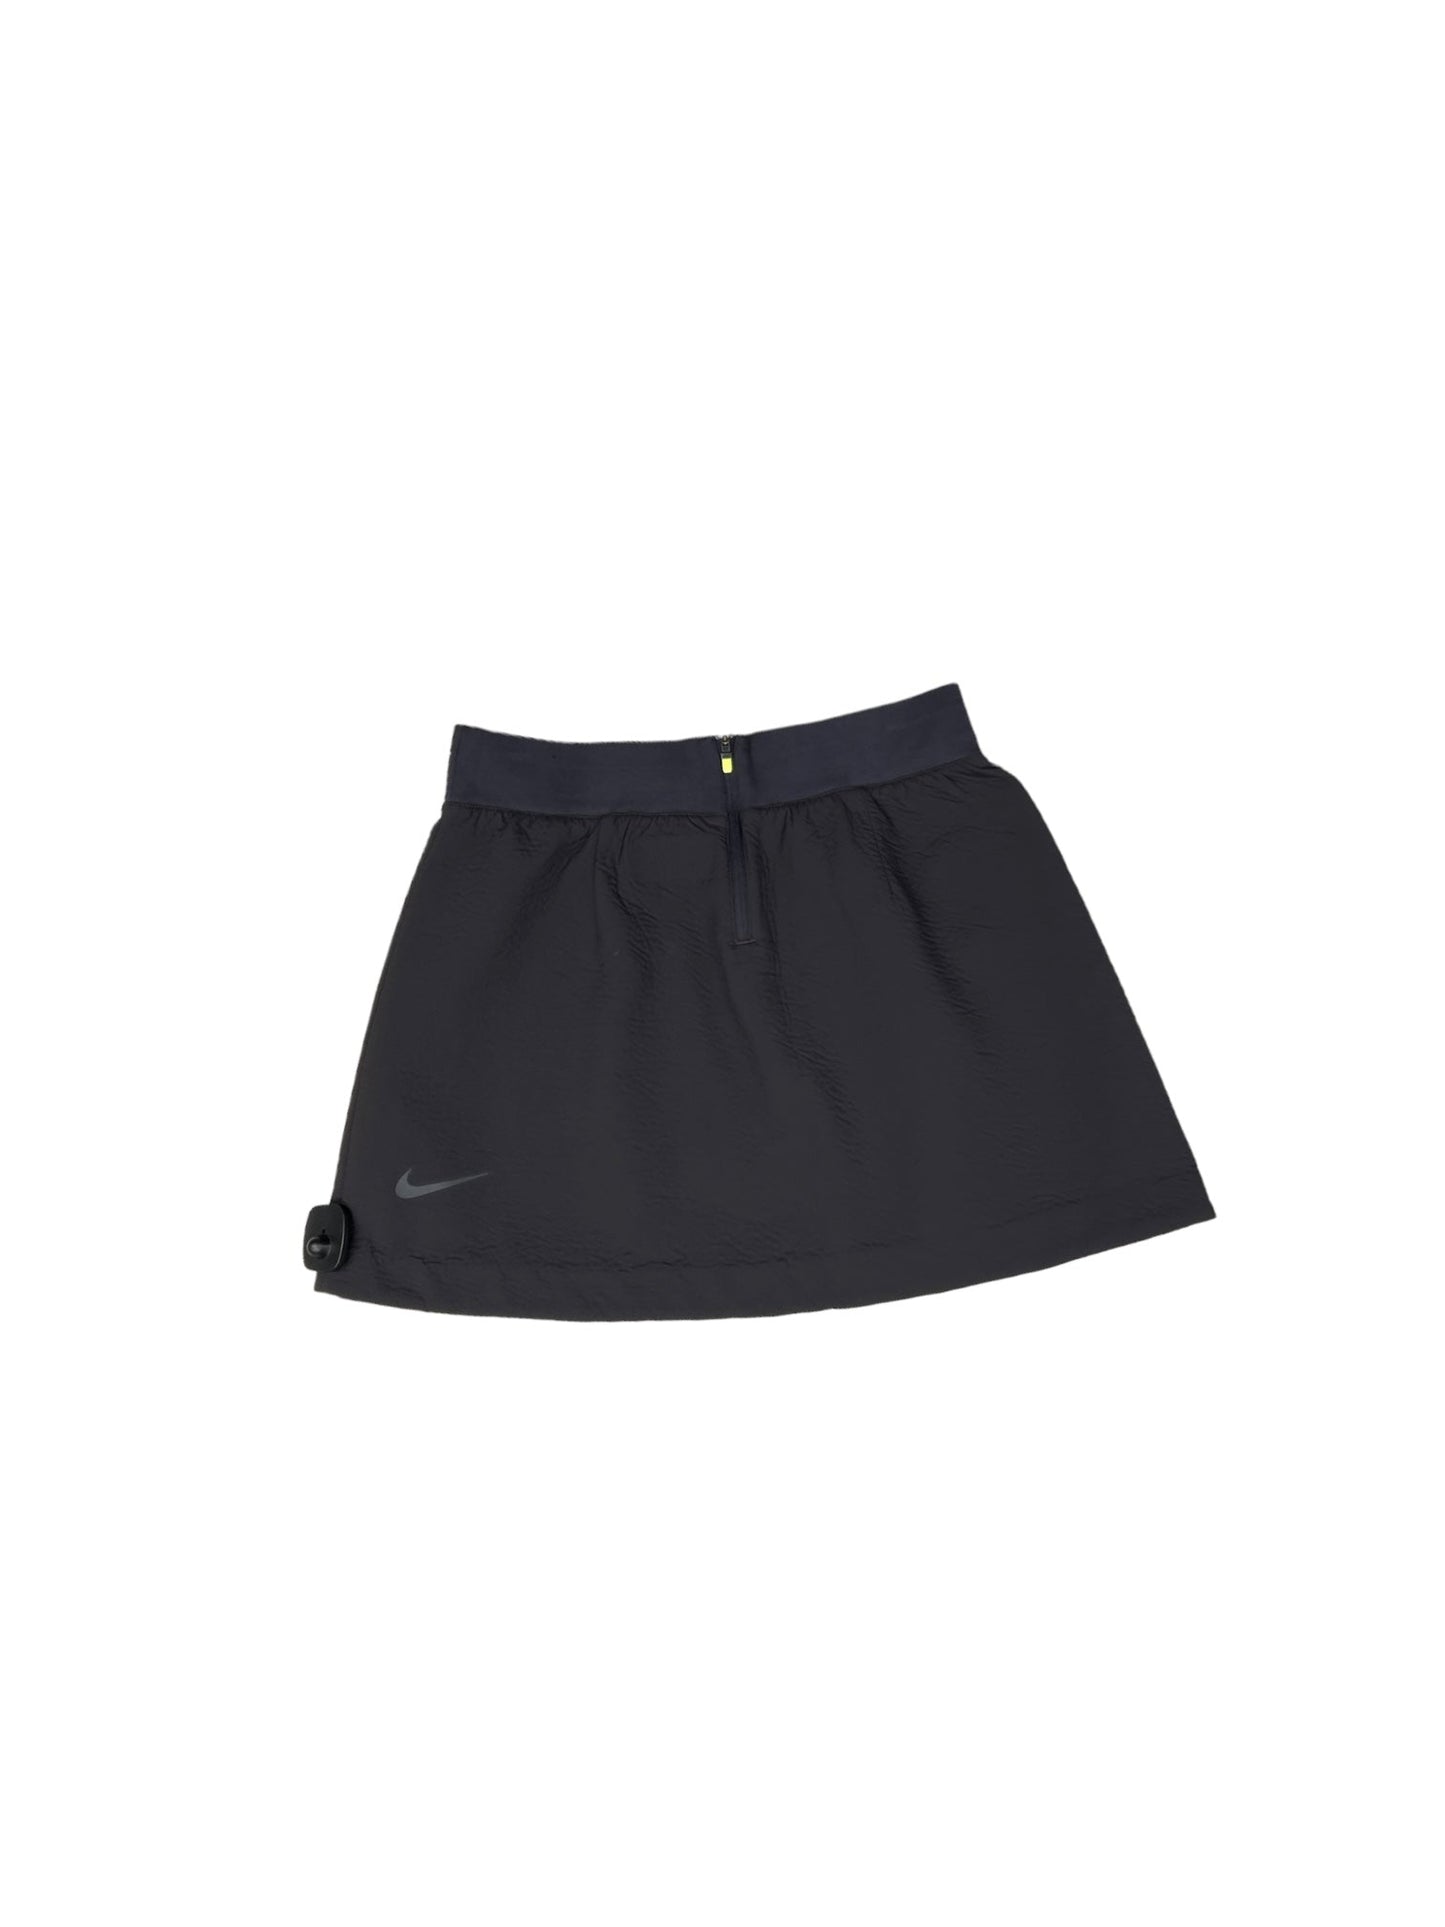 Skirt Midi By Nike Apparel  Size: L